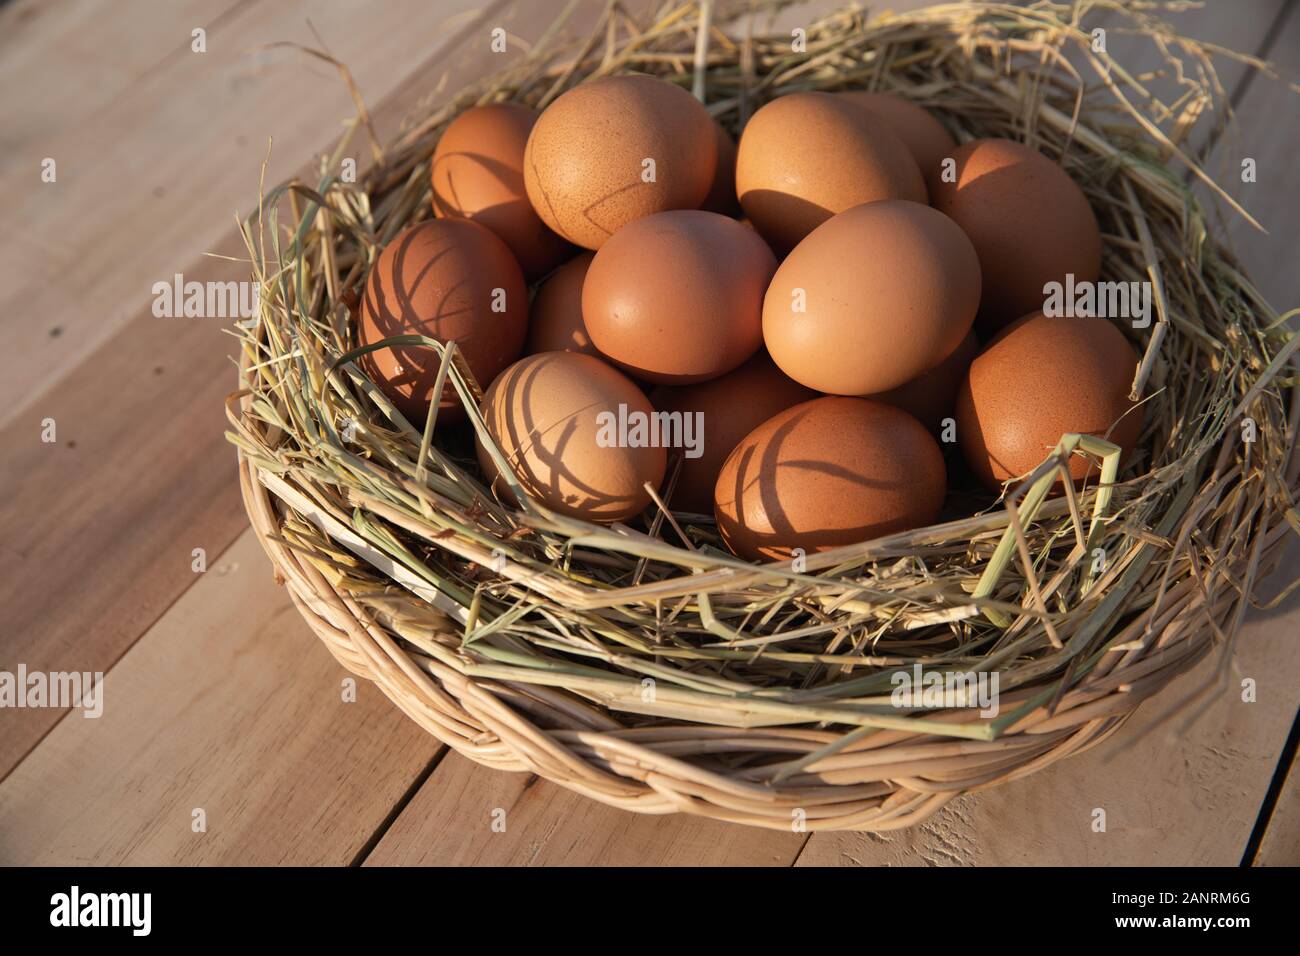 Egg basket on wooden floor Stock Photo